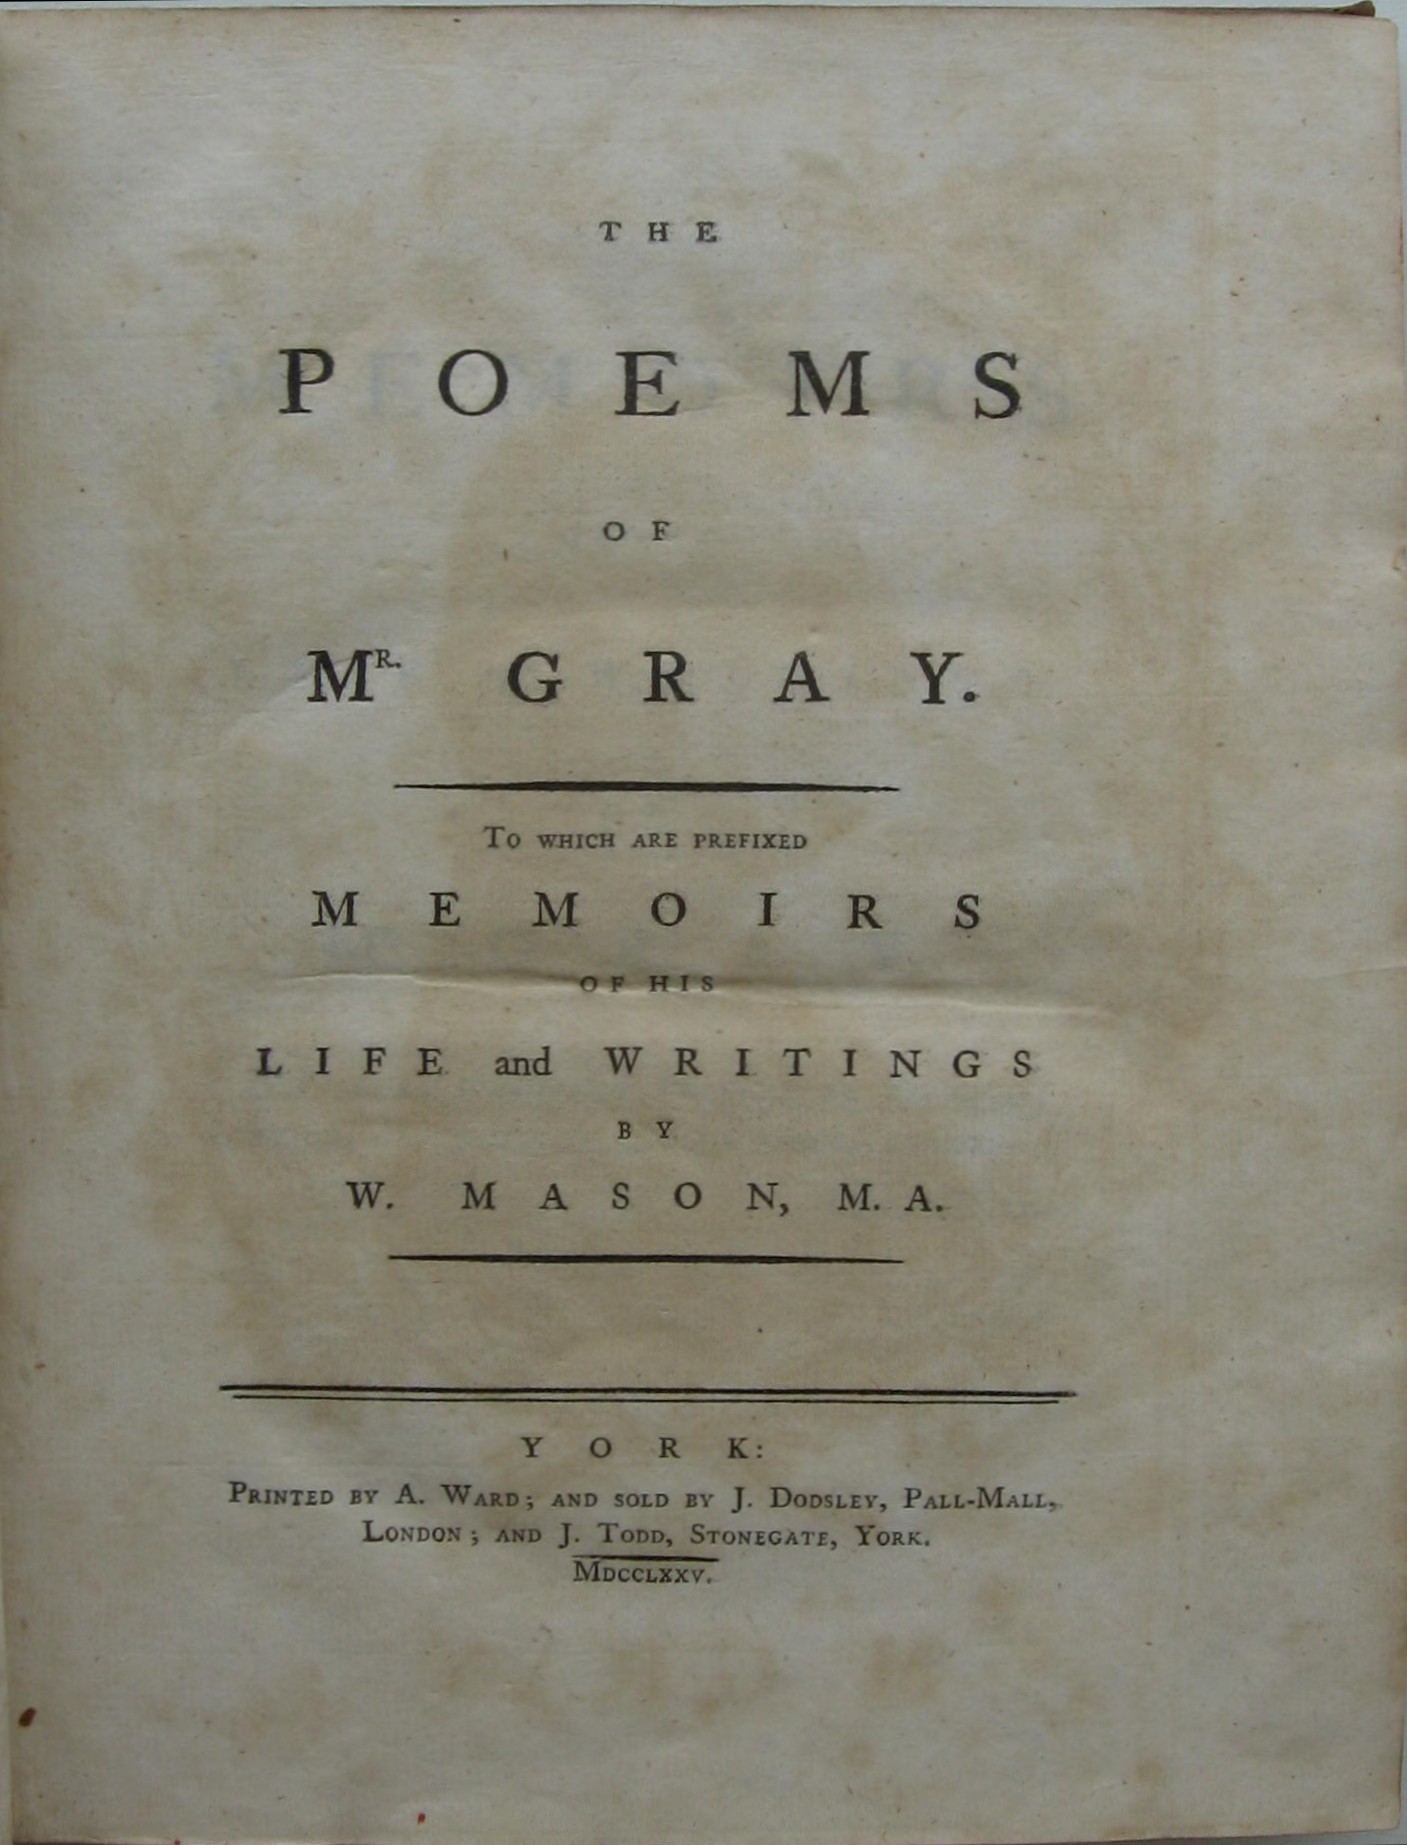 Grey's book